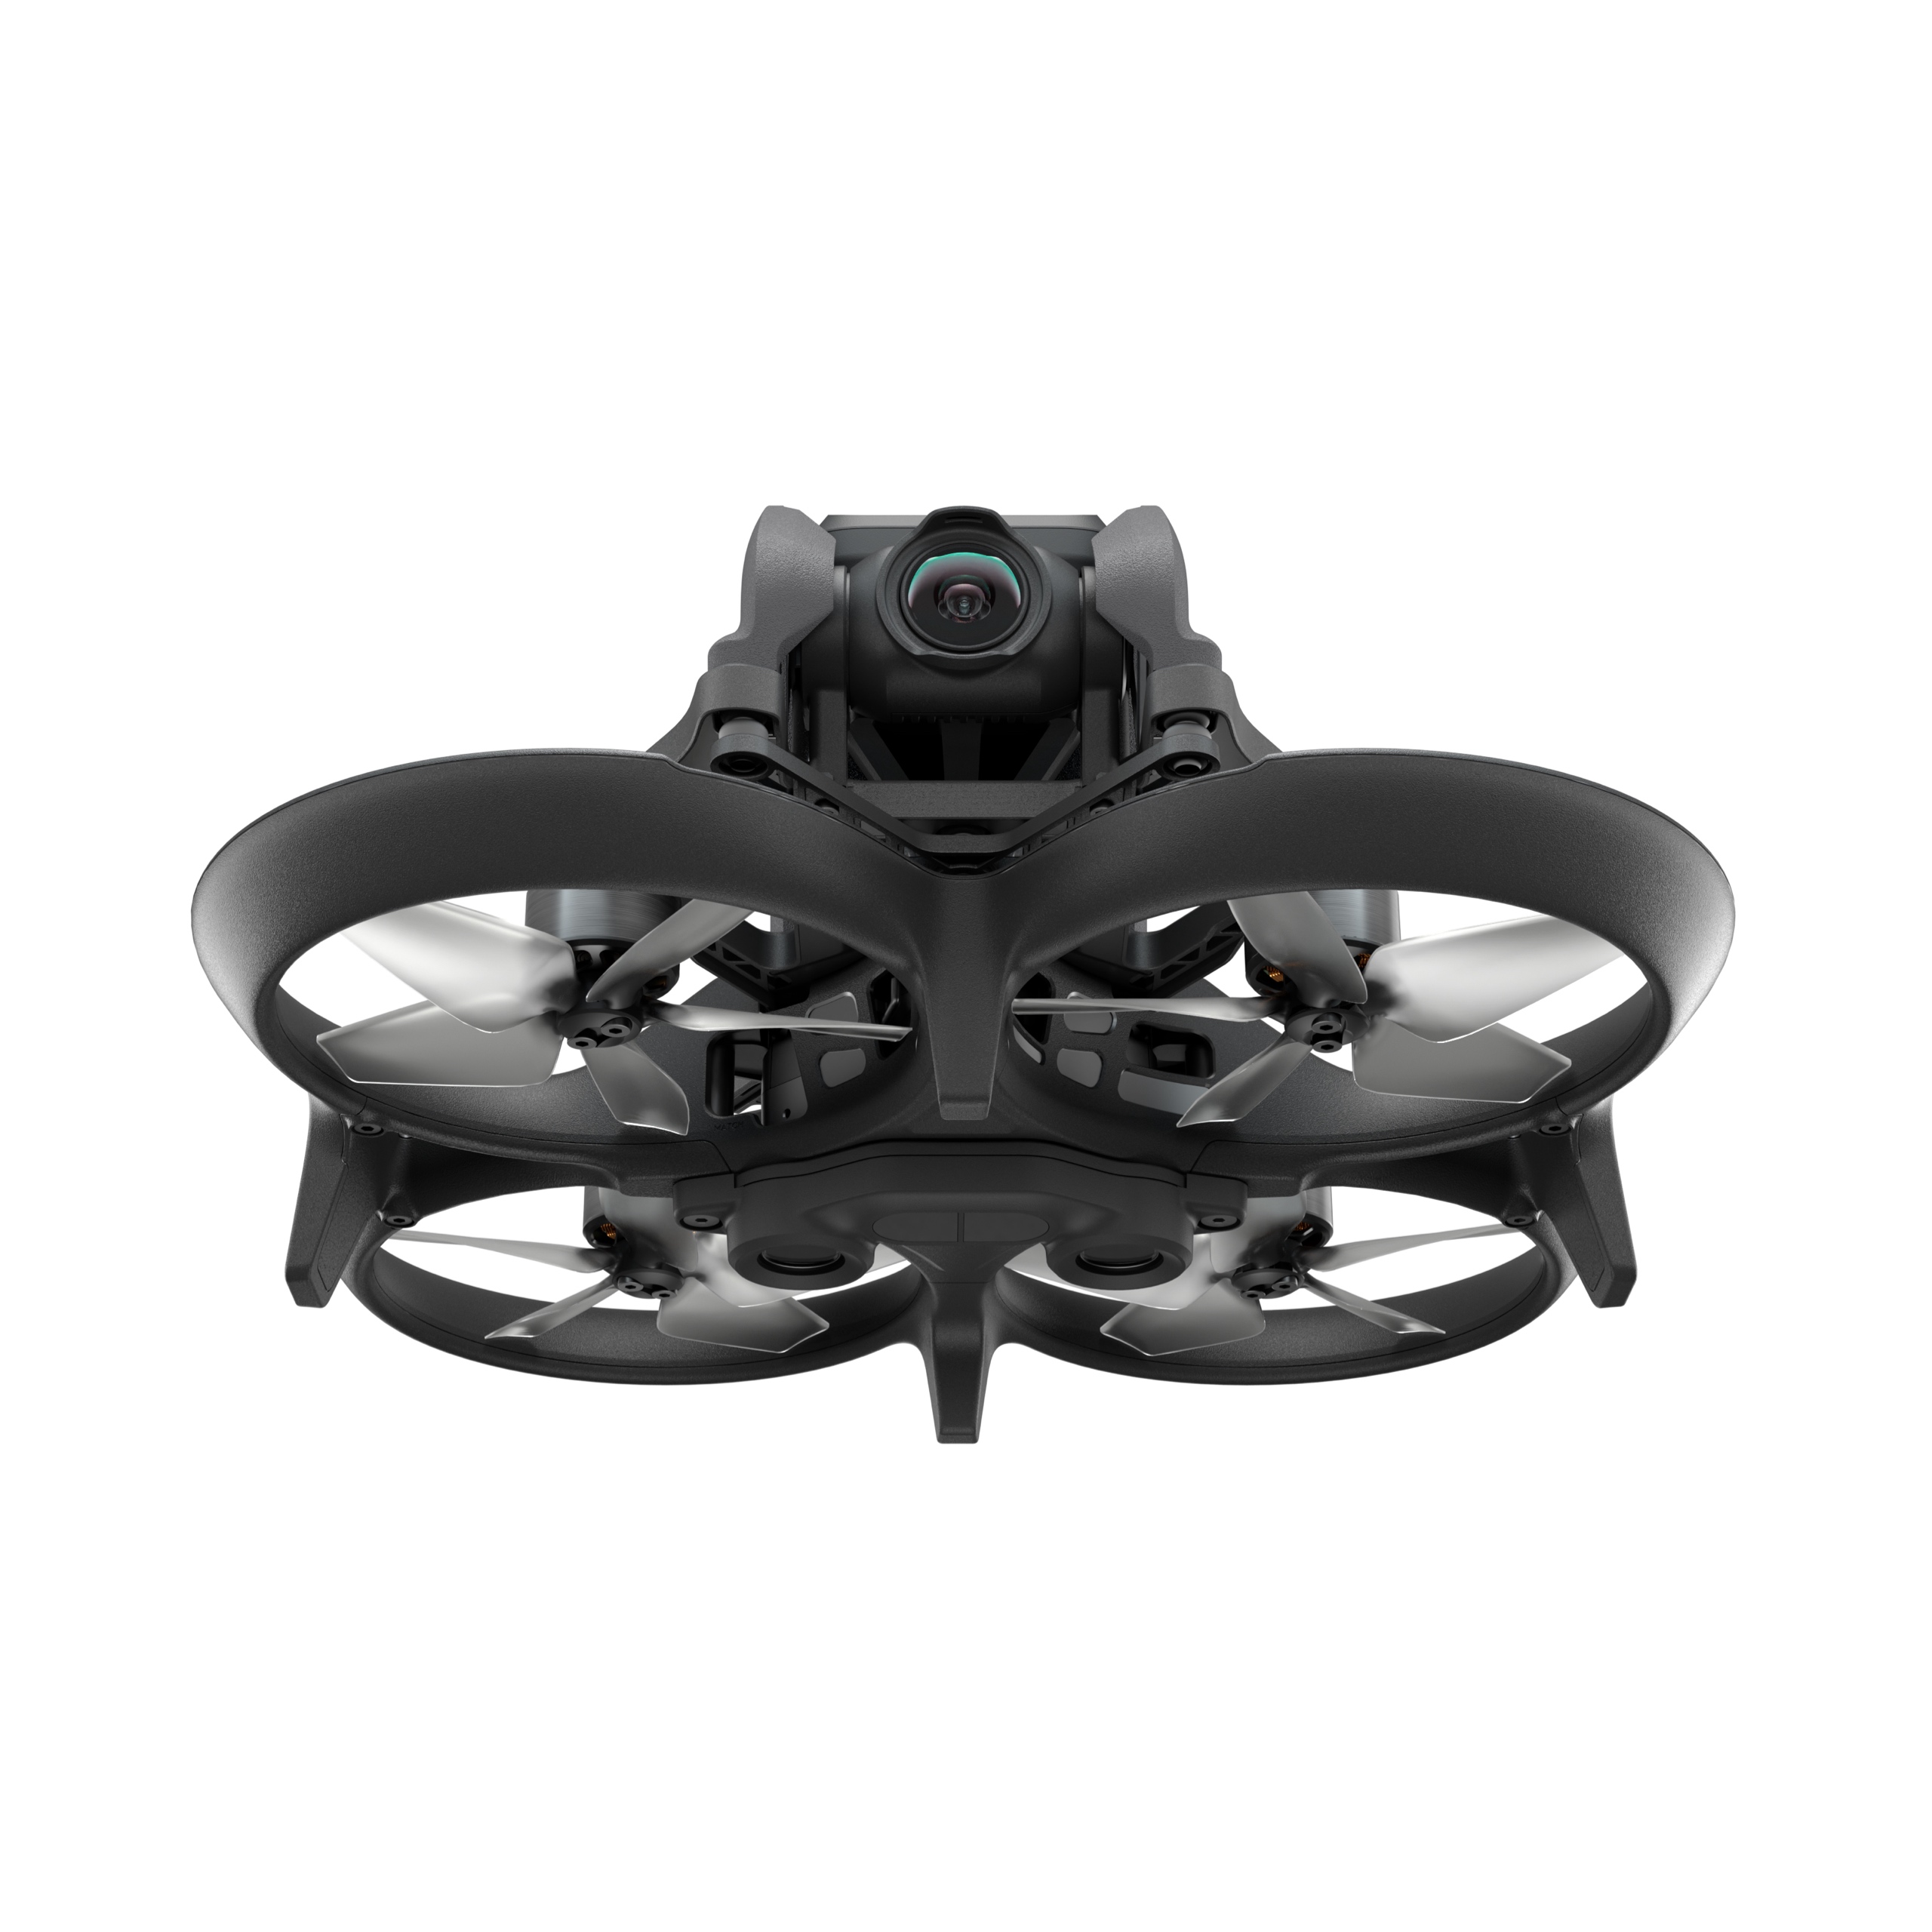 DJI Avata Immersive Flight Drone Intuitive Motion Control 4K/60fps